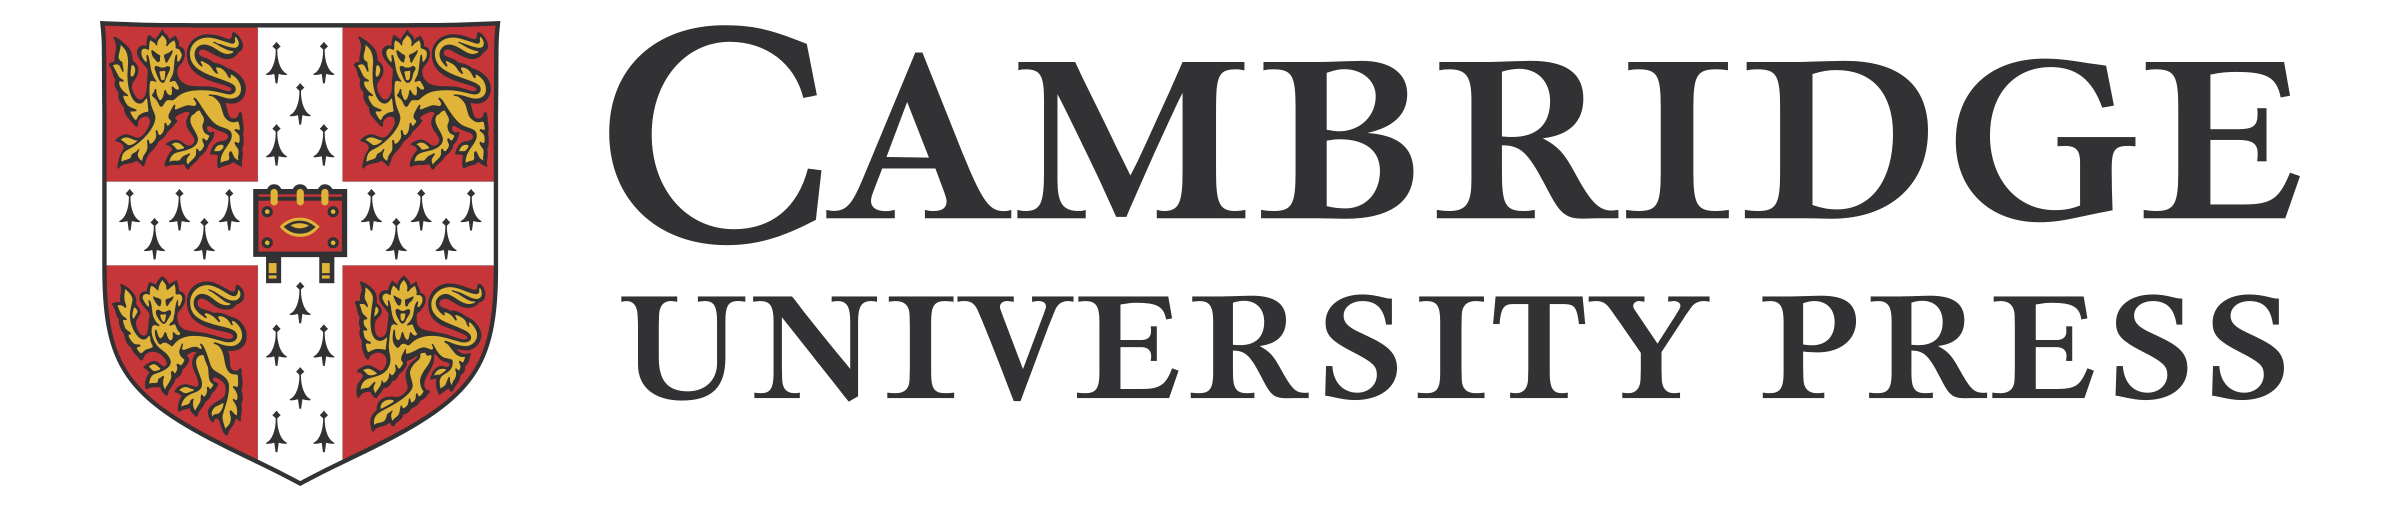 Cambridge Logo - Cambridge Logo PNG Transparent & SVG Vector - Freebie Supply